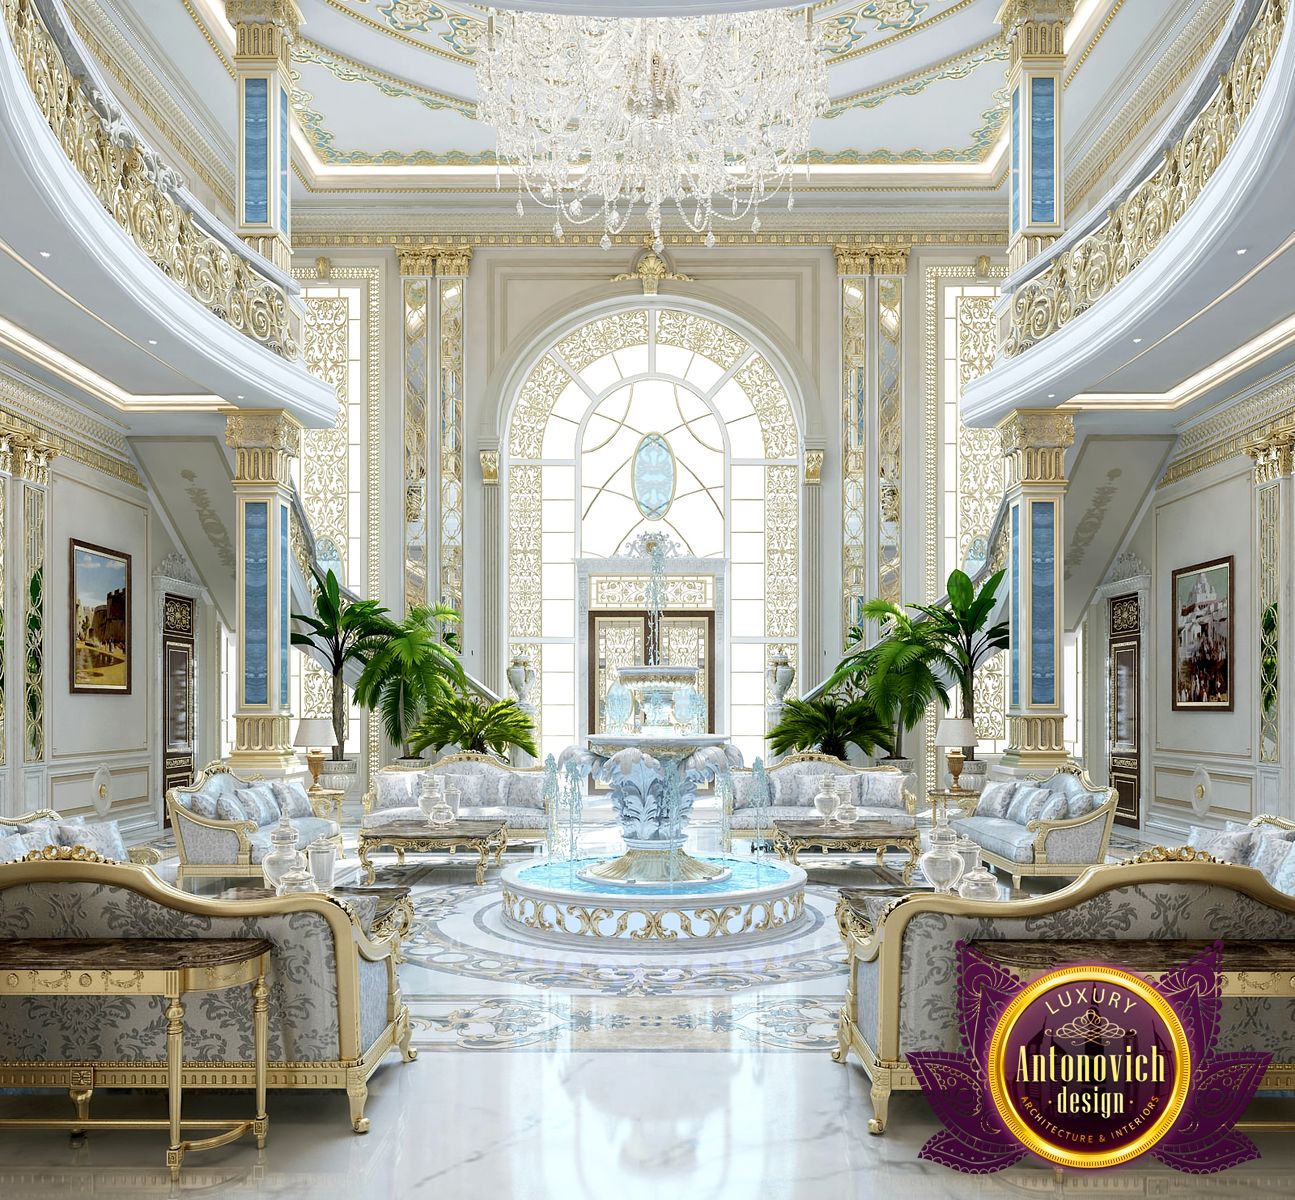 LUXURY ANTONOVICH DESIGN UAE: The best interior design villa by Katrina ...